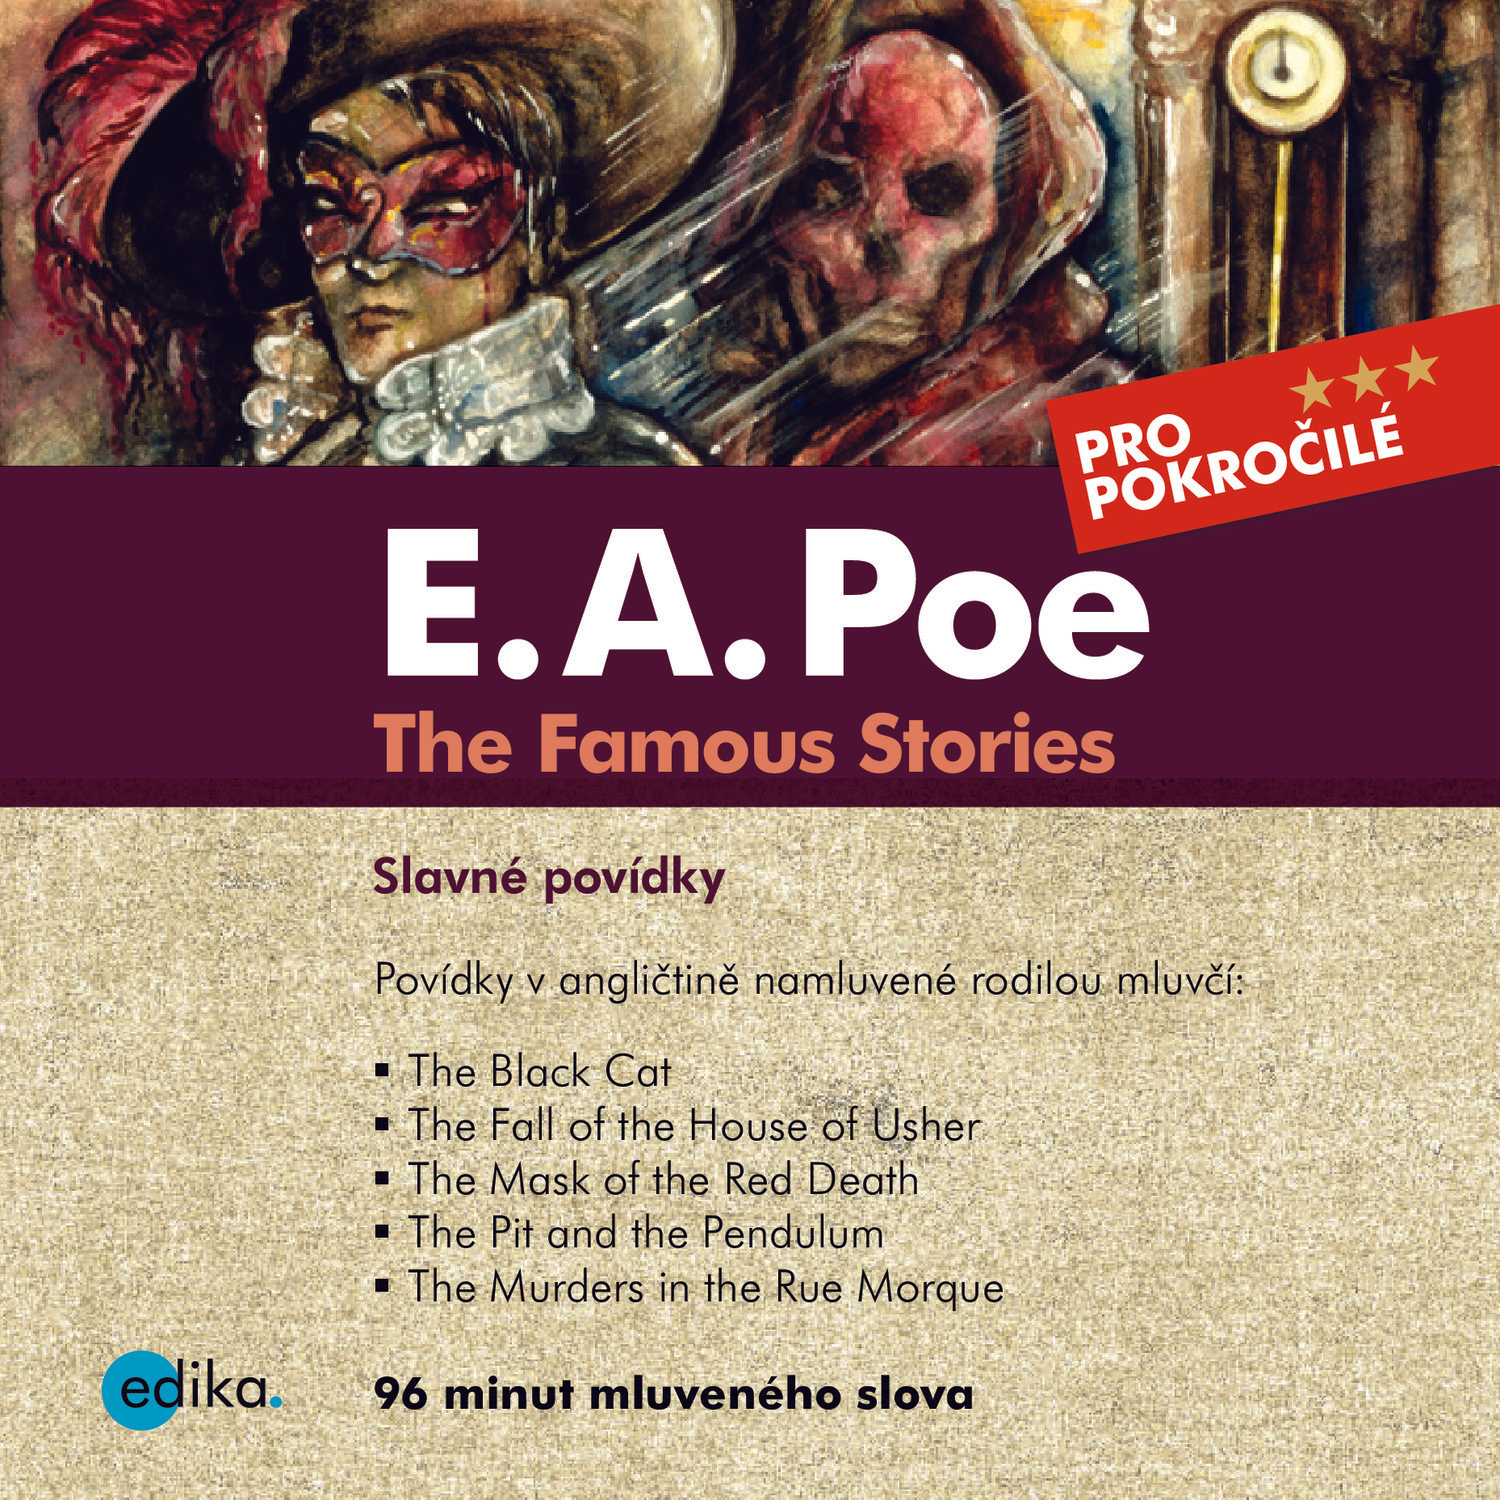 Edgar Allan Poe - Famous Stories (EN)